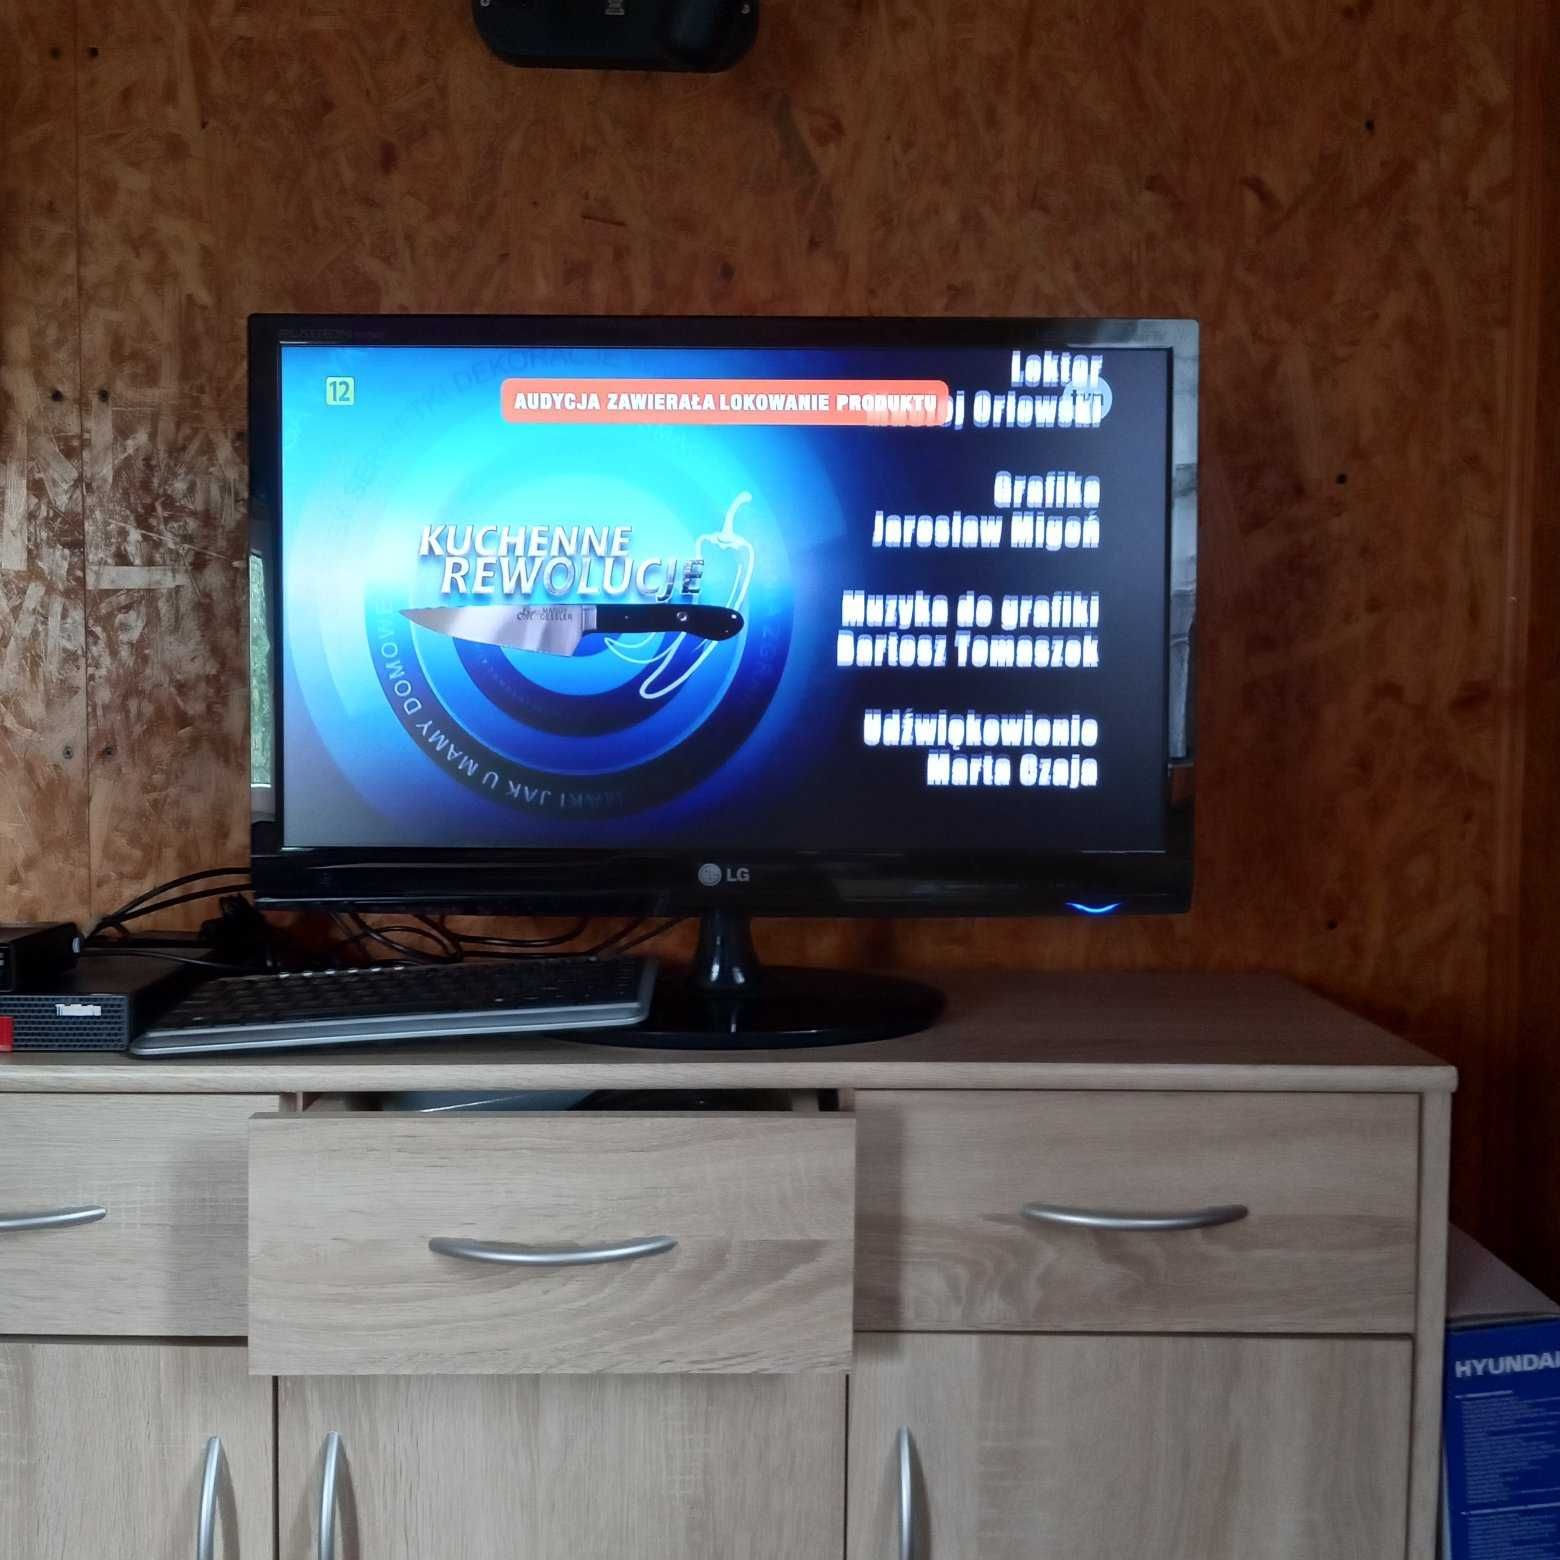 Telewizor monitor 27" Lg M2780d + nowy dekoder dvbt